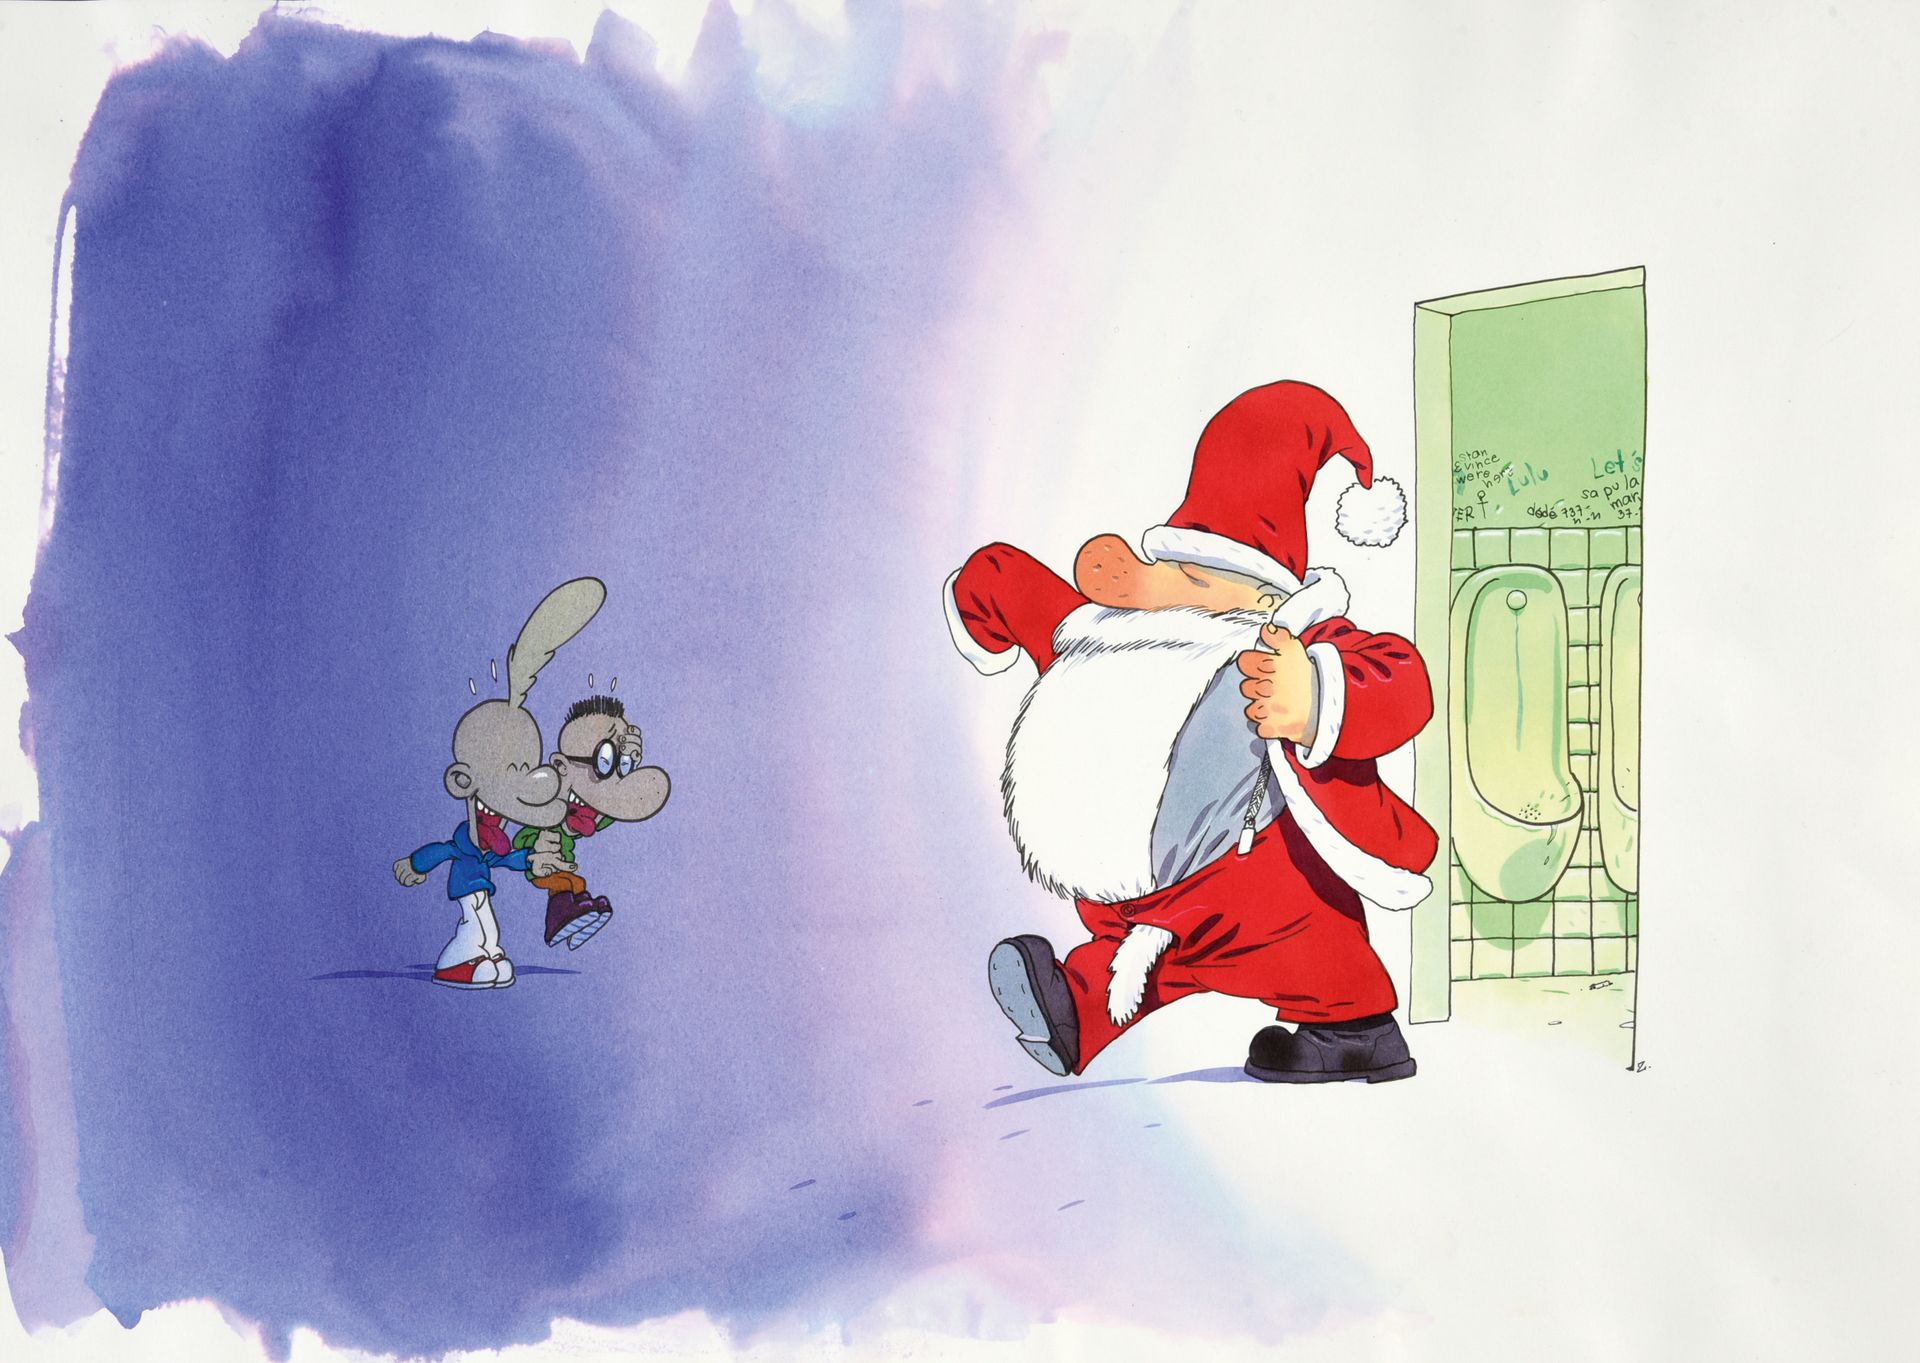 ZEP, Philippe CHAPPUIS dit (1967) 蒂特夫和圣诞老人。

印度墨水和彩色墨水，为著名的泰特夫创作者绘制幽默的插图。

在右下方有&hellip;